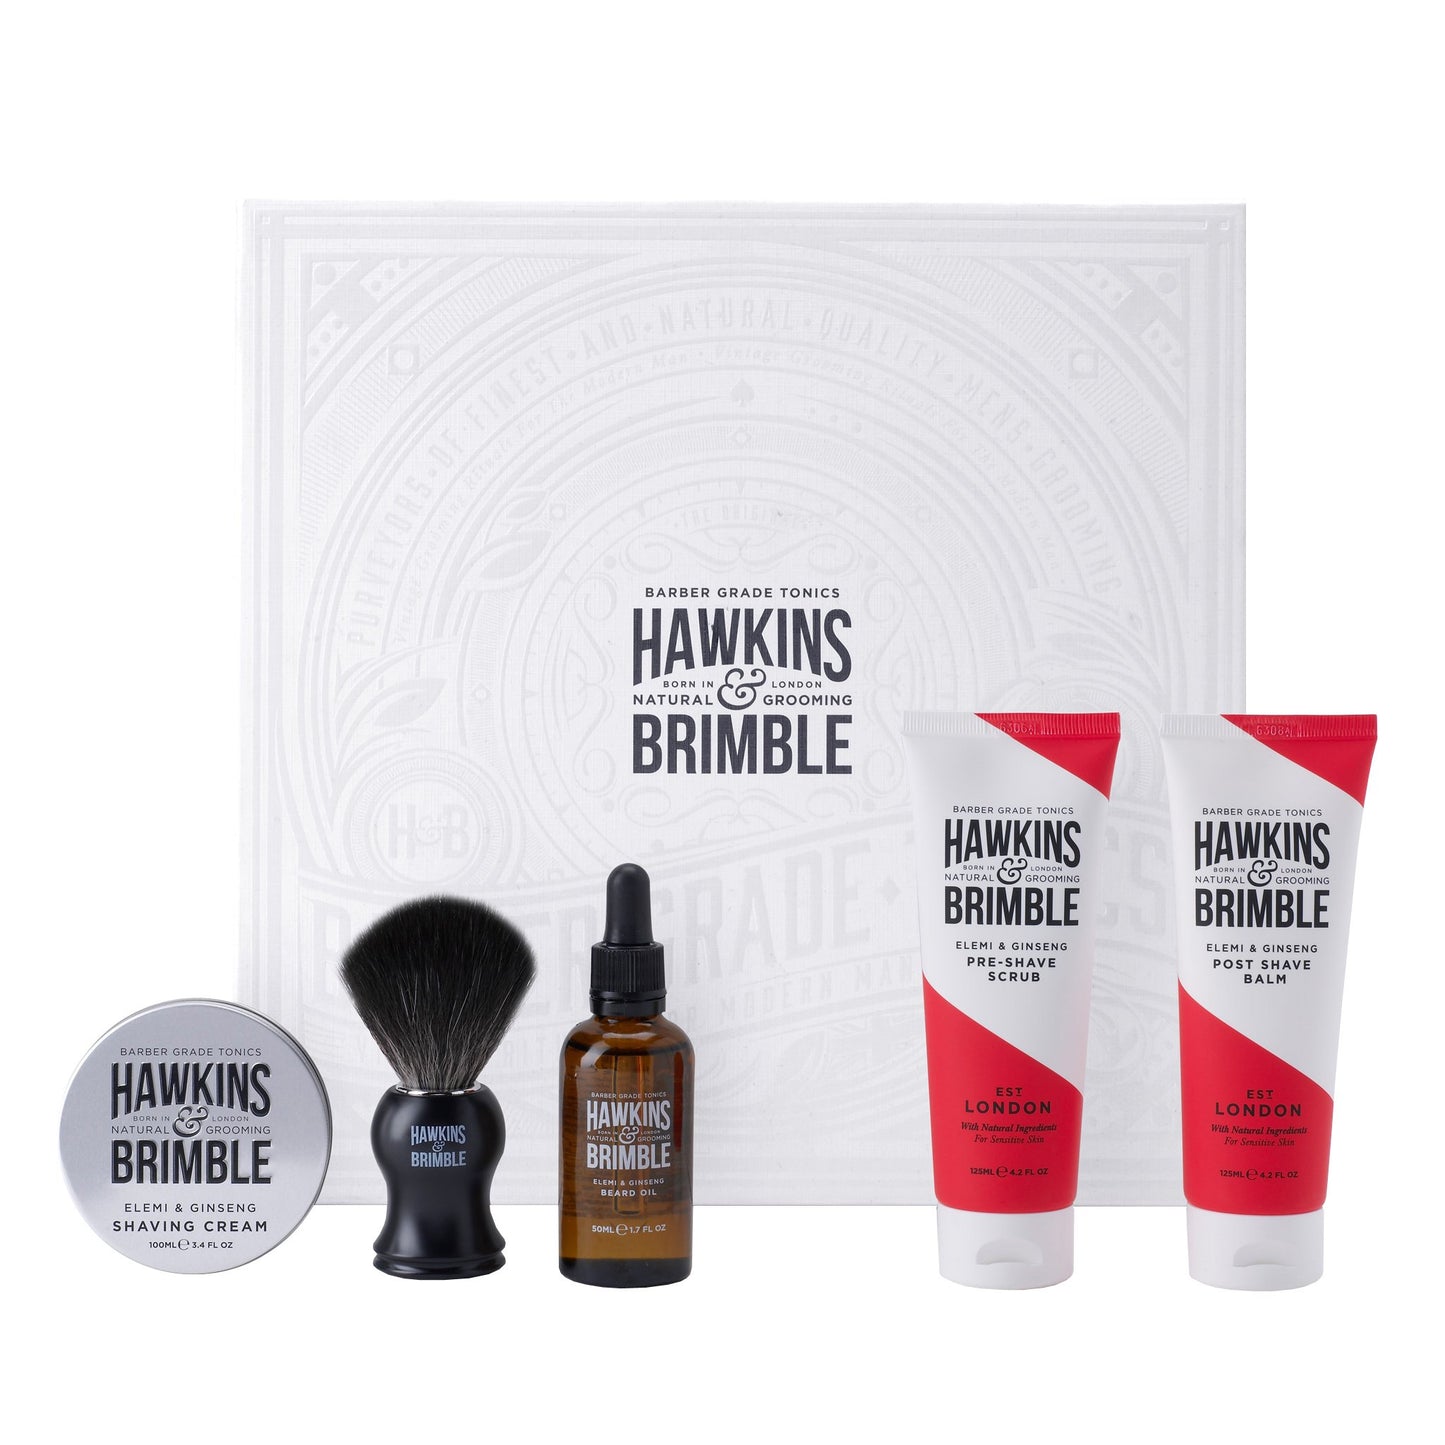 Hawkins and Brimble Limited Edition Gift Set